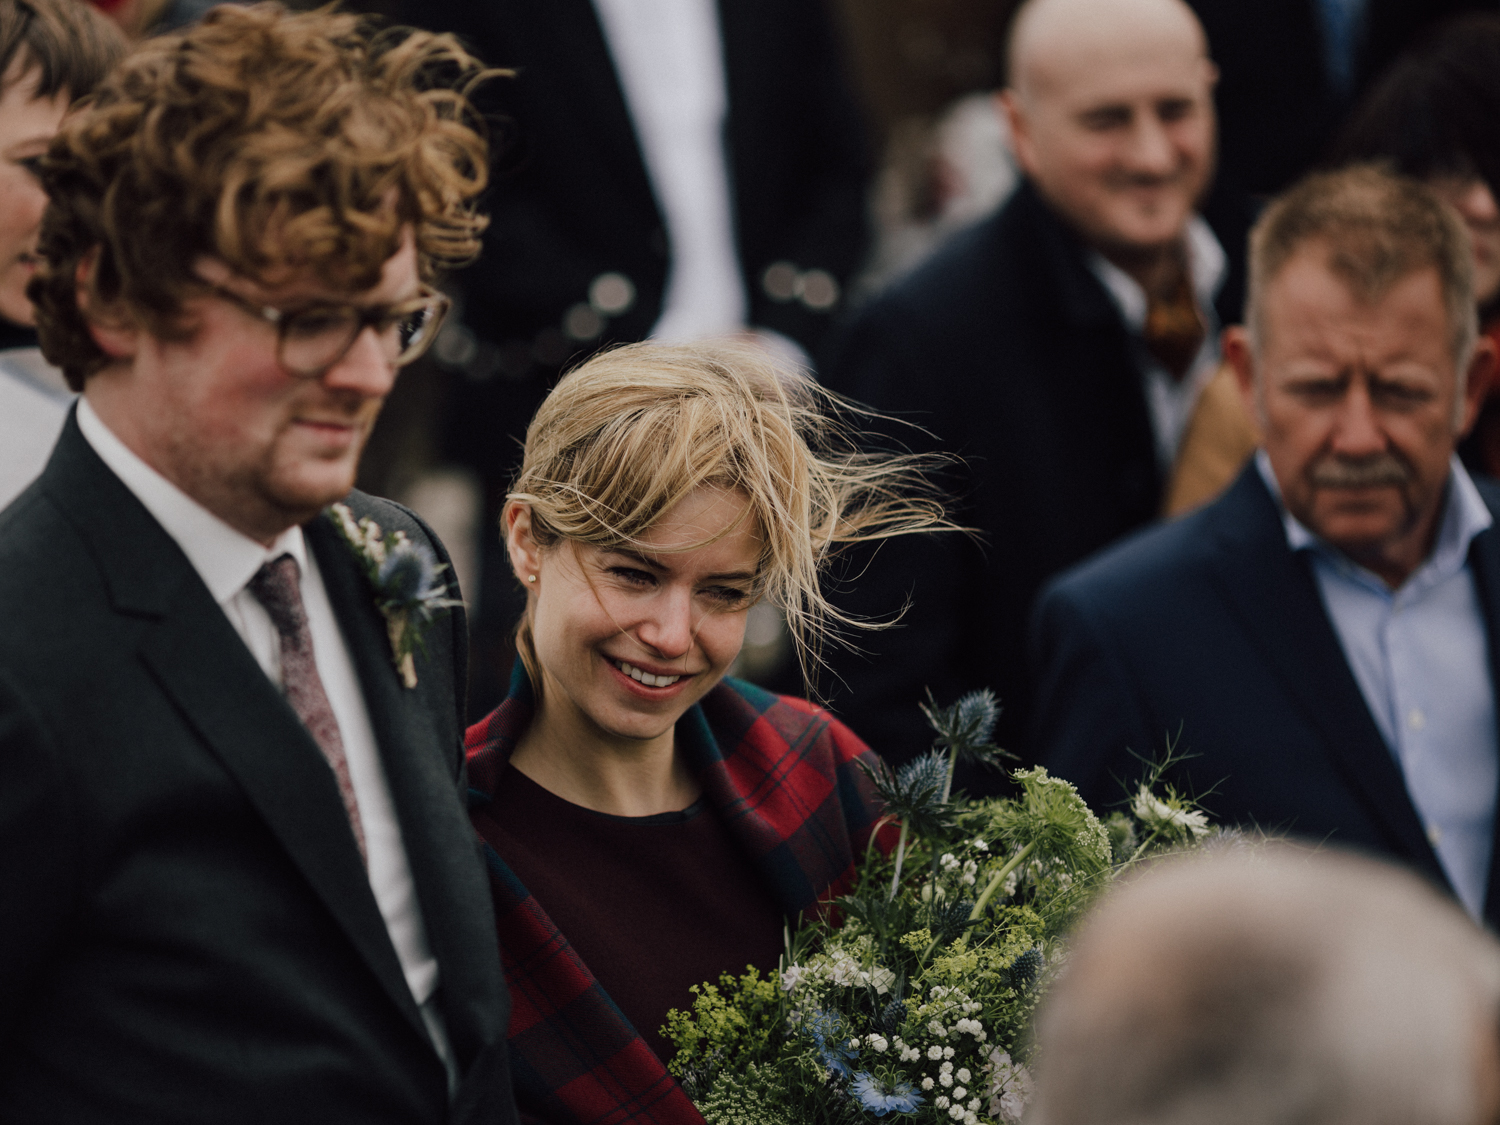 capyture-wedding-photographer-destination-nature-intimate-wedding-isle-of-skye-scotland-306